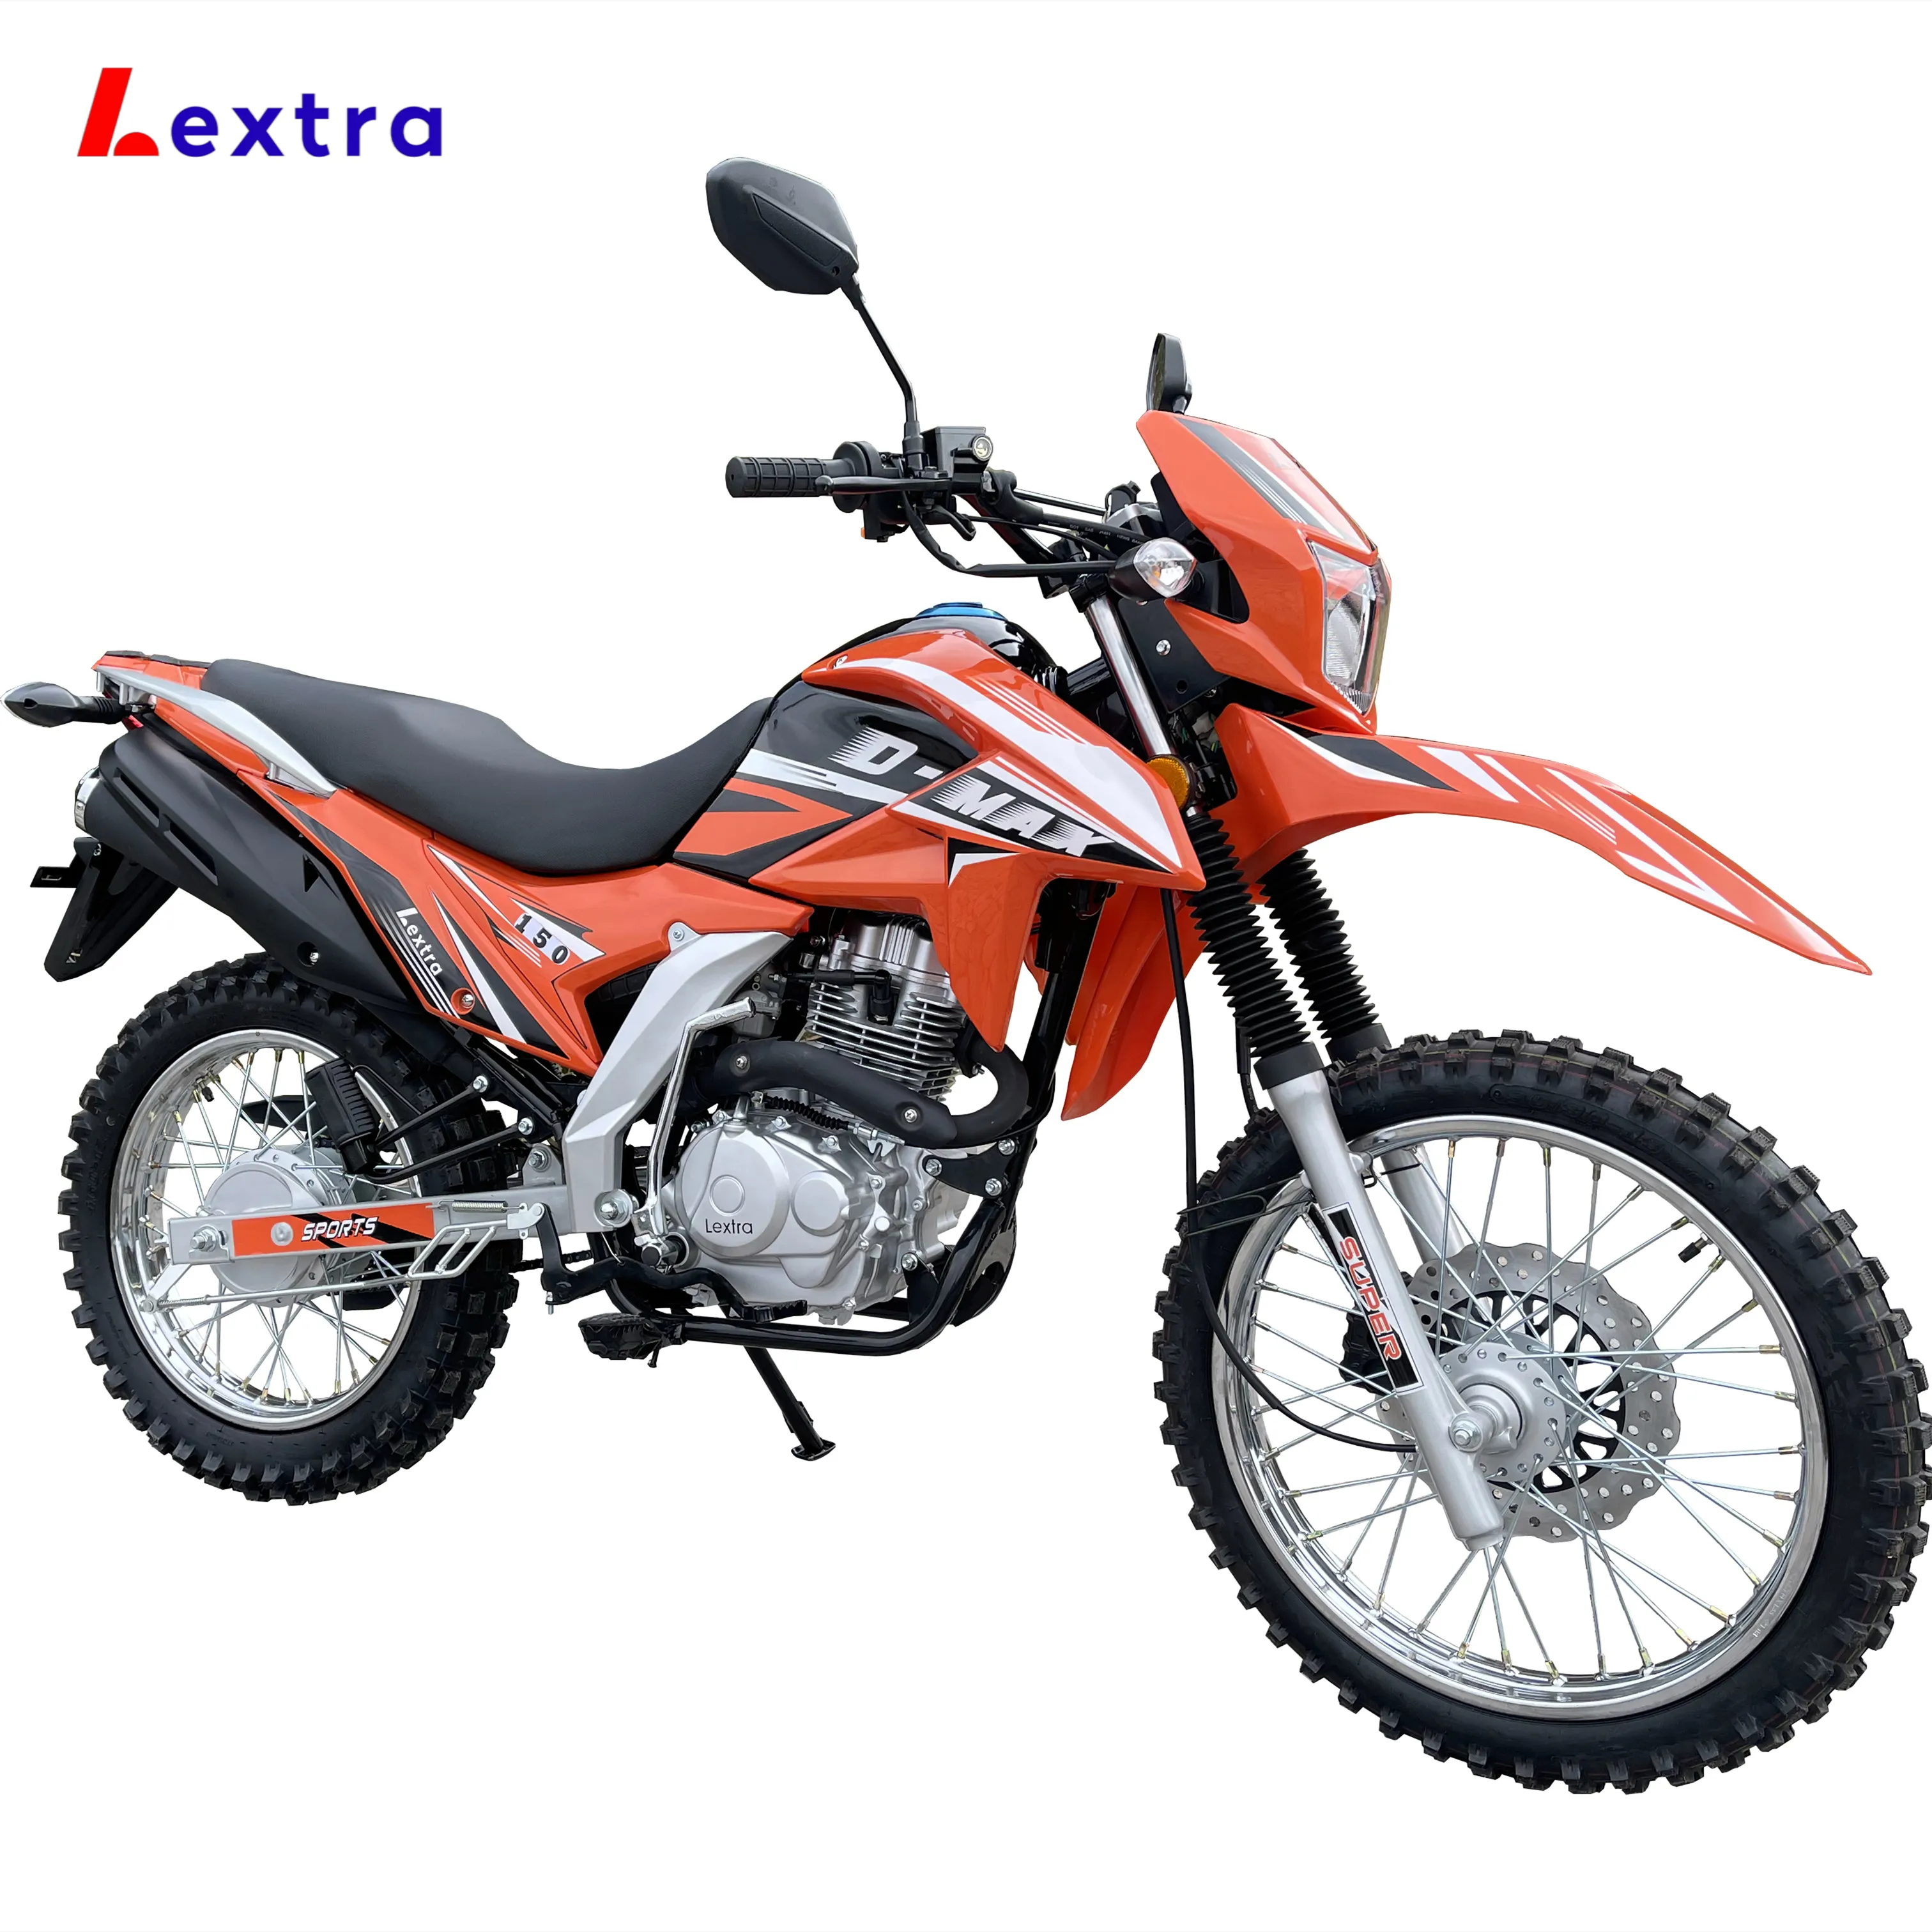 Lextra sepeda motor 150cc bensin Kualitas Bagus 4 tak sepeda motor Trail 150cc sepeda motor lain untuk dewasa